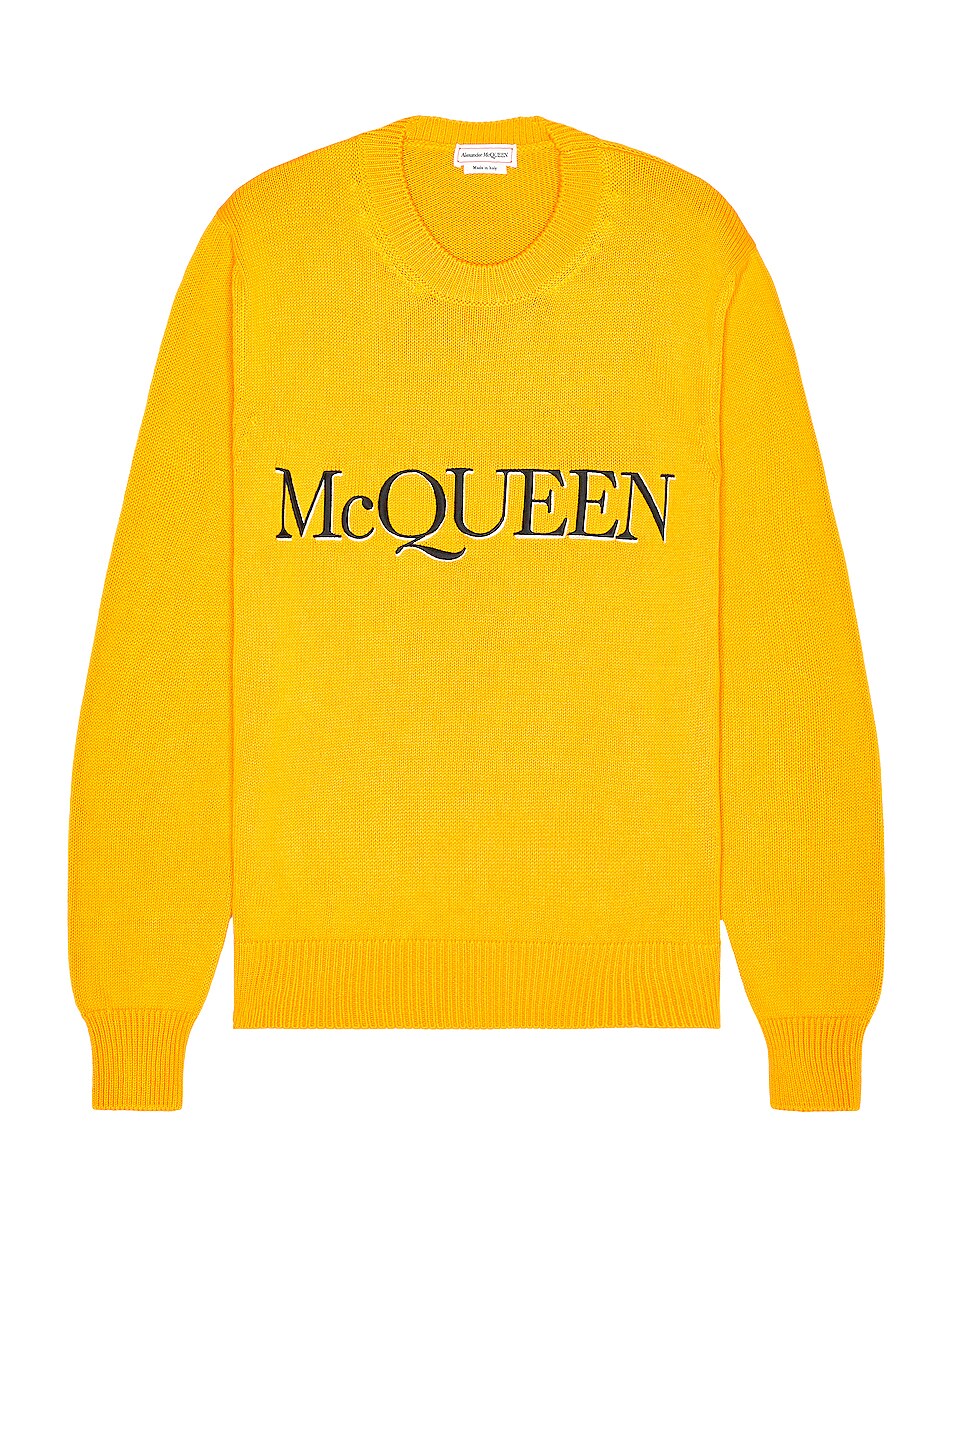 Alexander McQueen Crew Neck Pullover in Pop Yellow, Black & White | FWRD